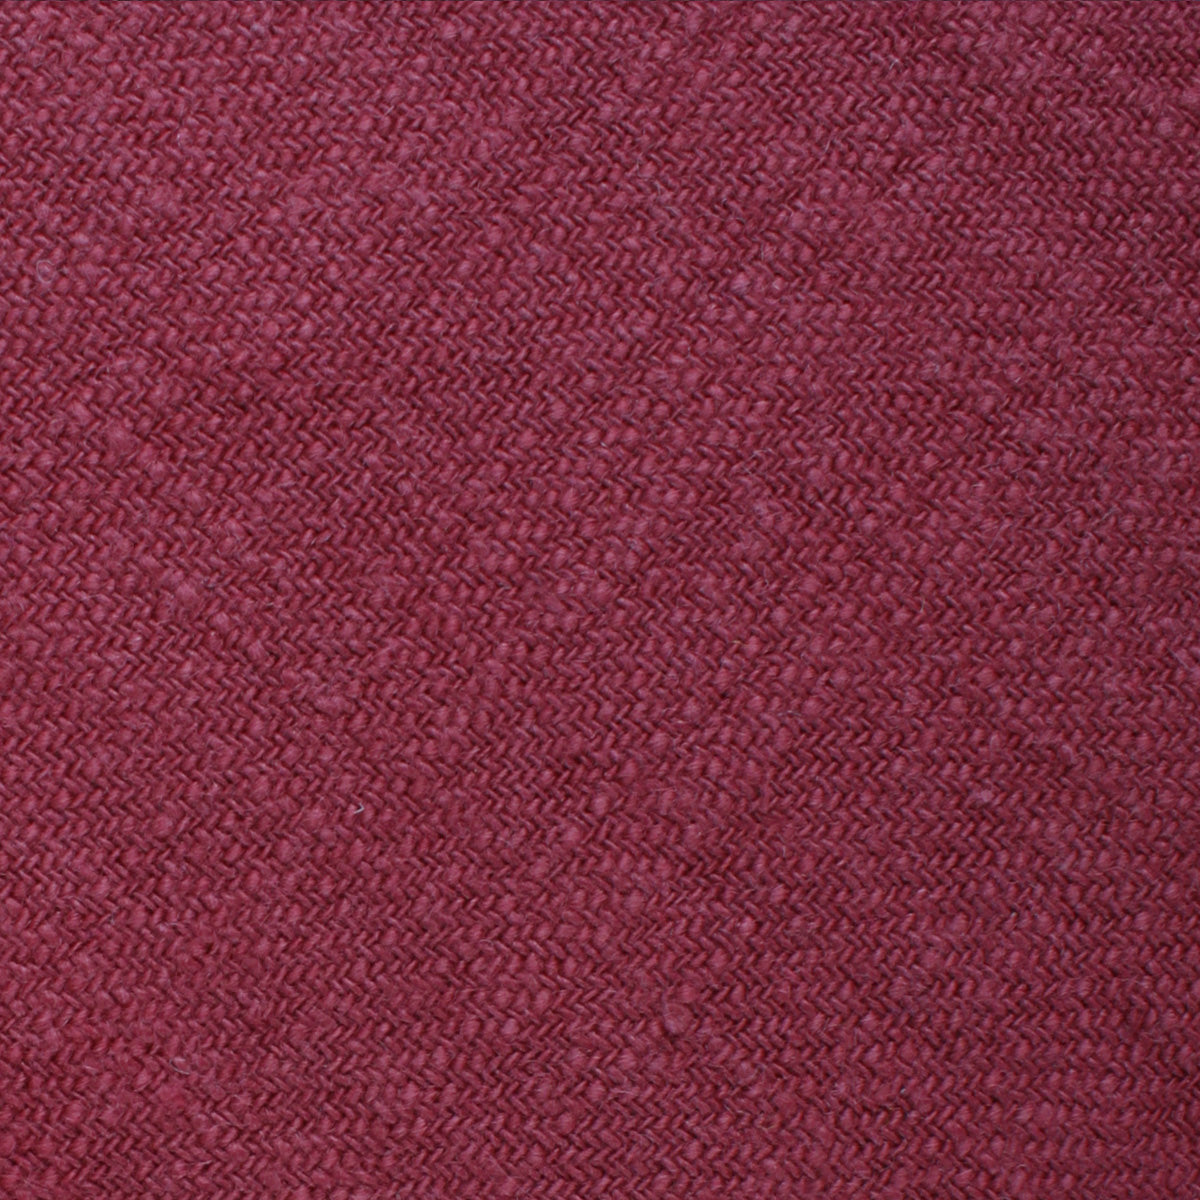 Chianti Maroon Linen Self Bow Tie Fabric